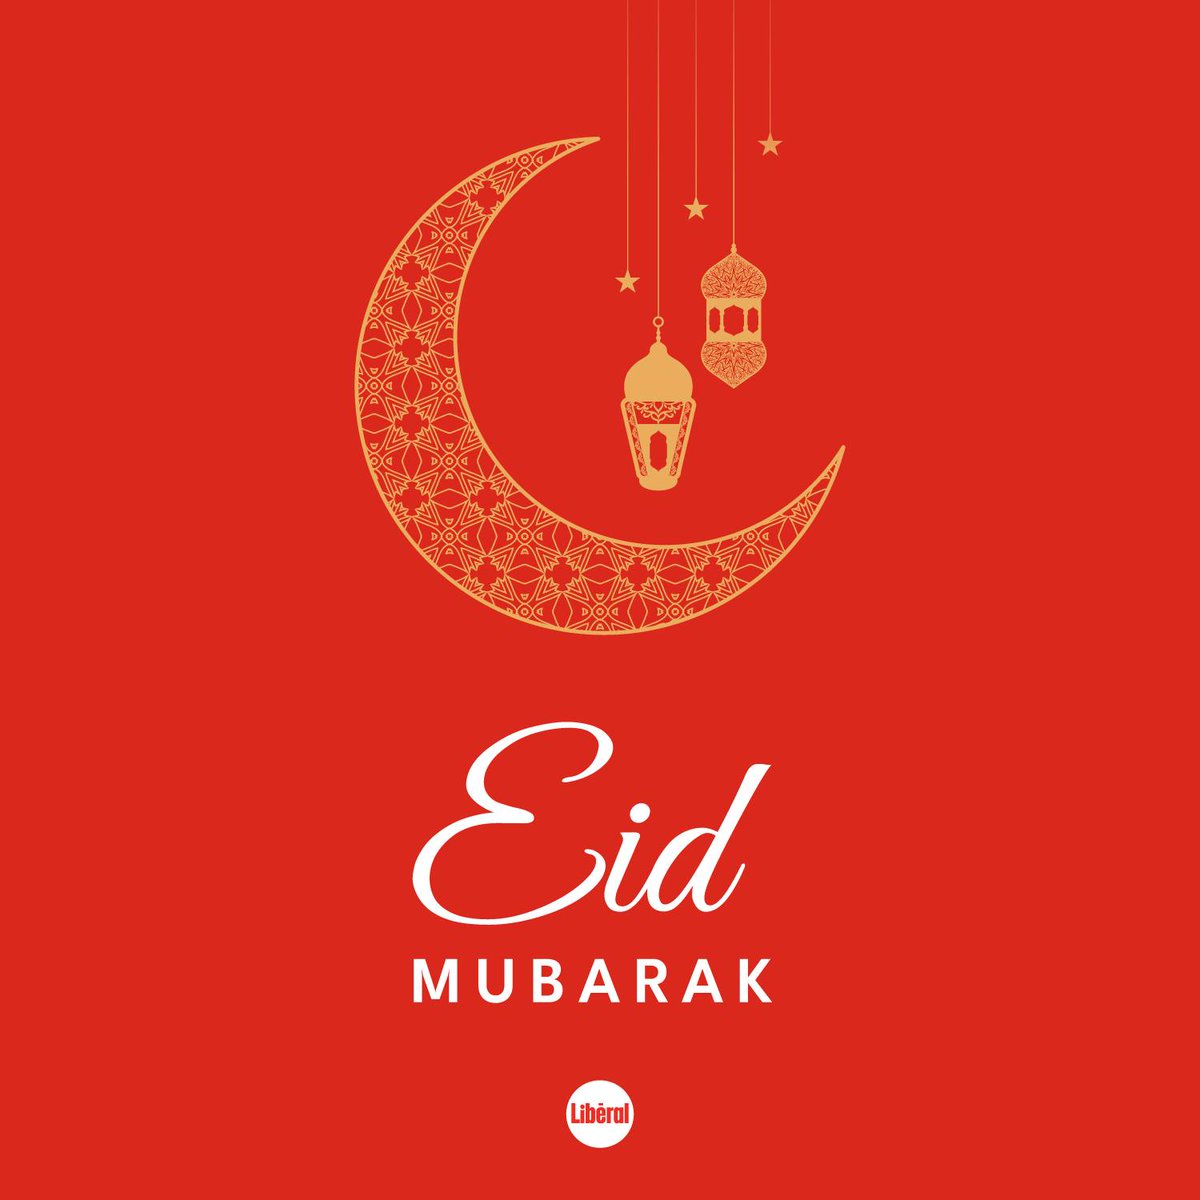 Eid Mubarak!